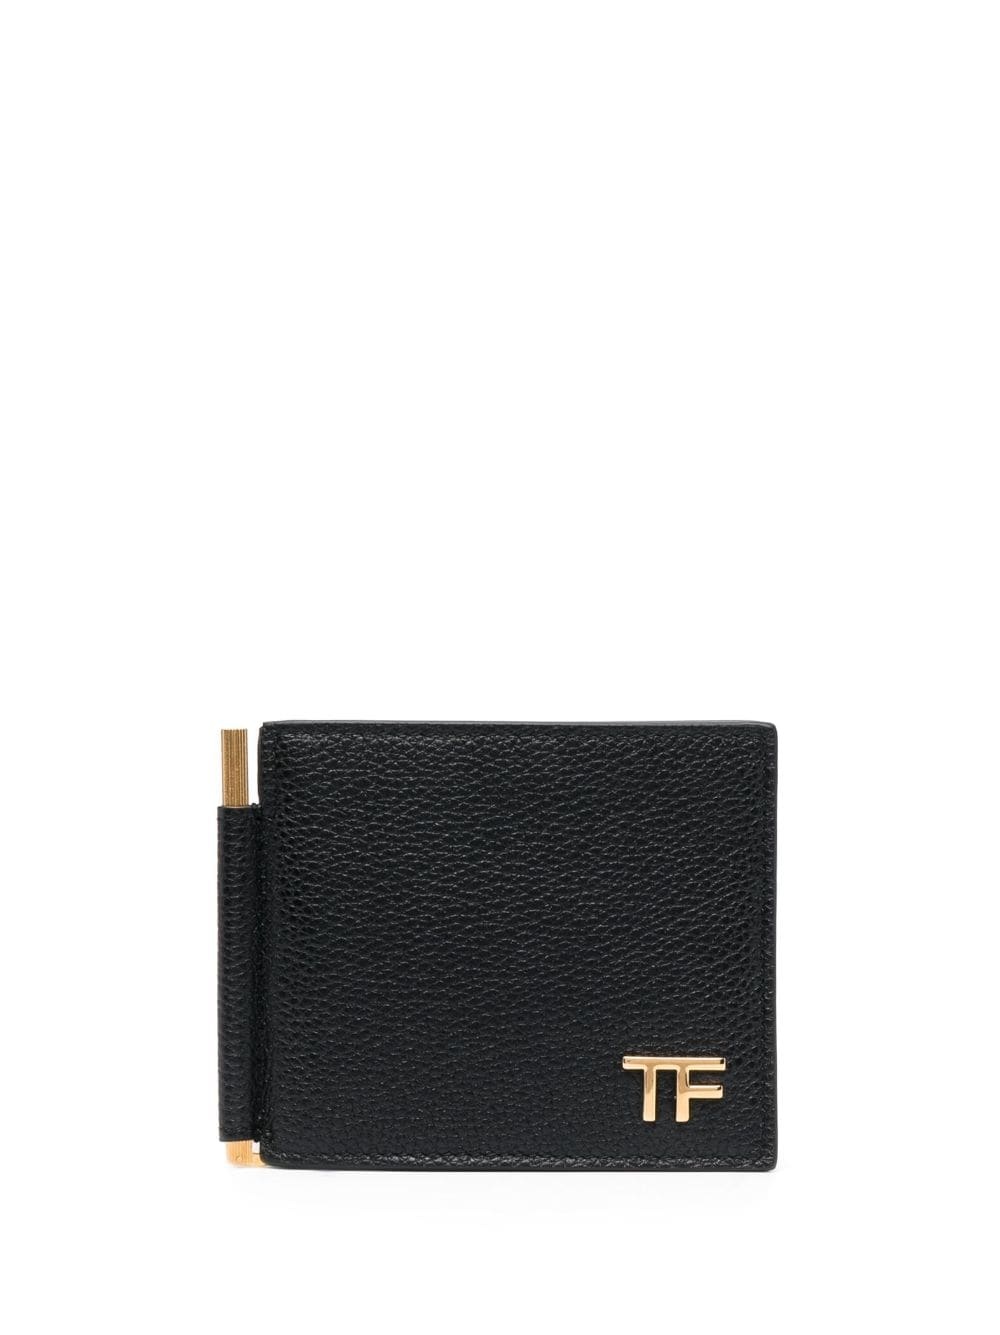 money clip leather wallet - 1